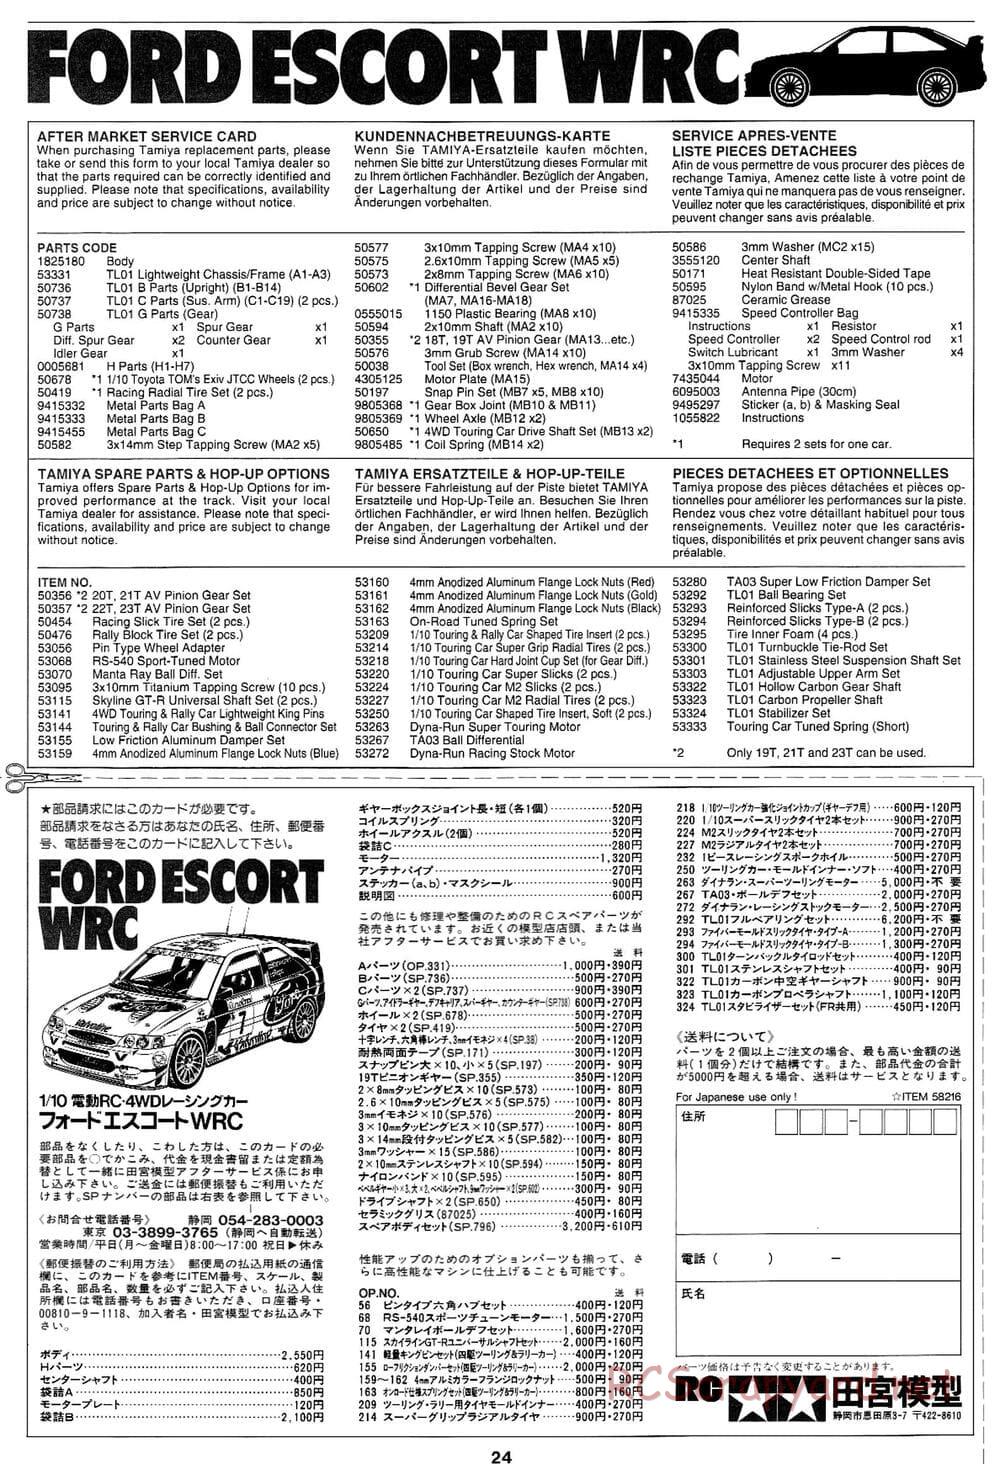 Tamiya - Ford Escort WRC - TL-01 Chassis - Manual - Page 24